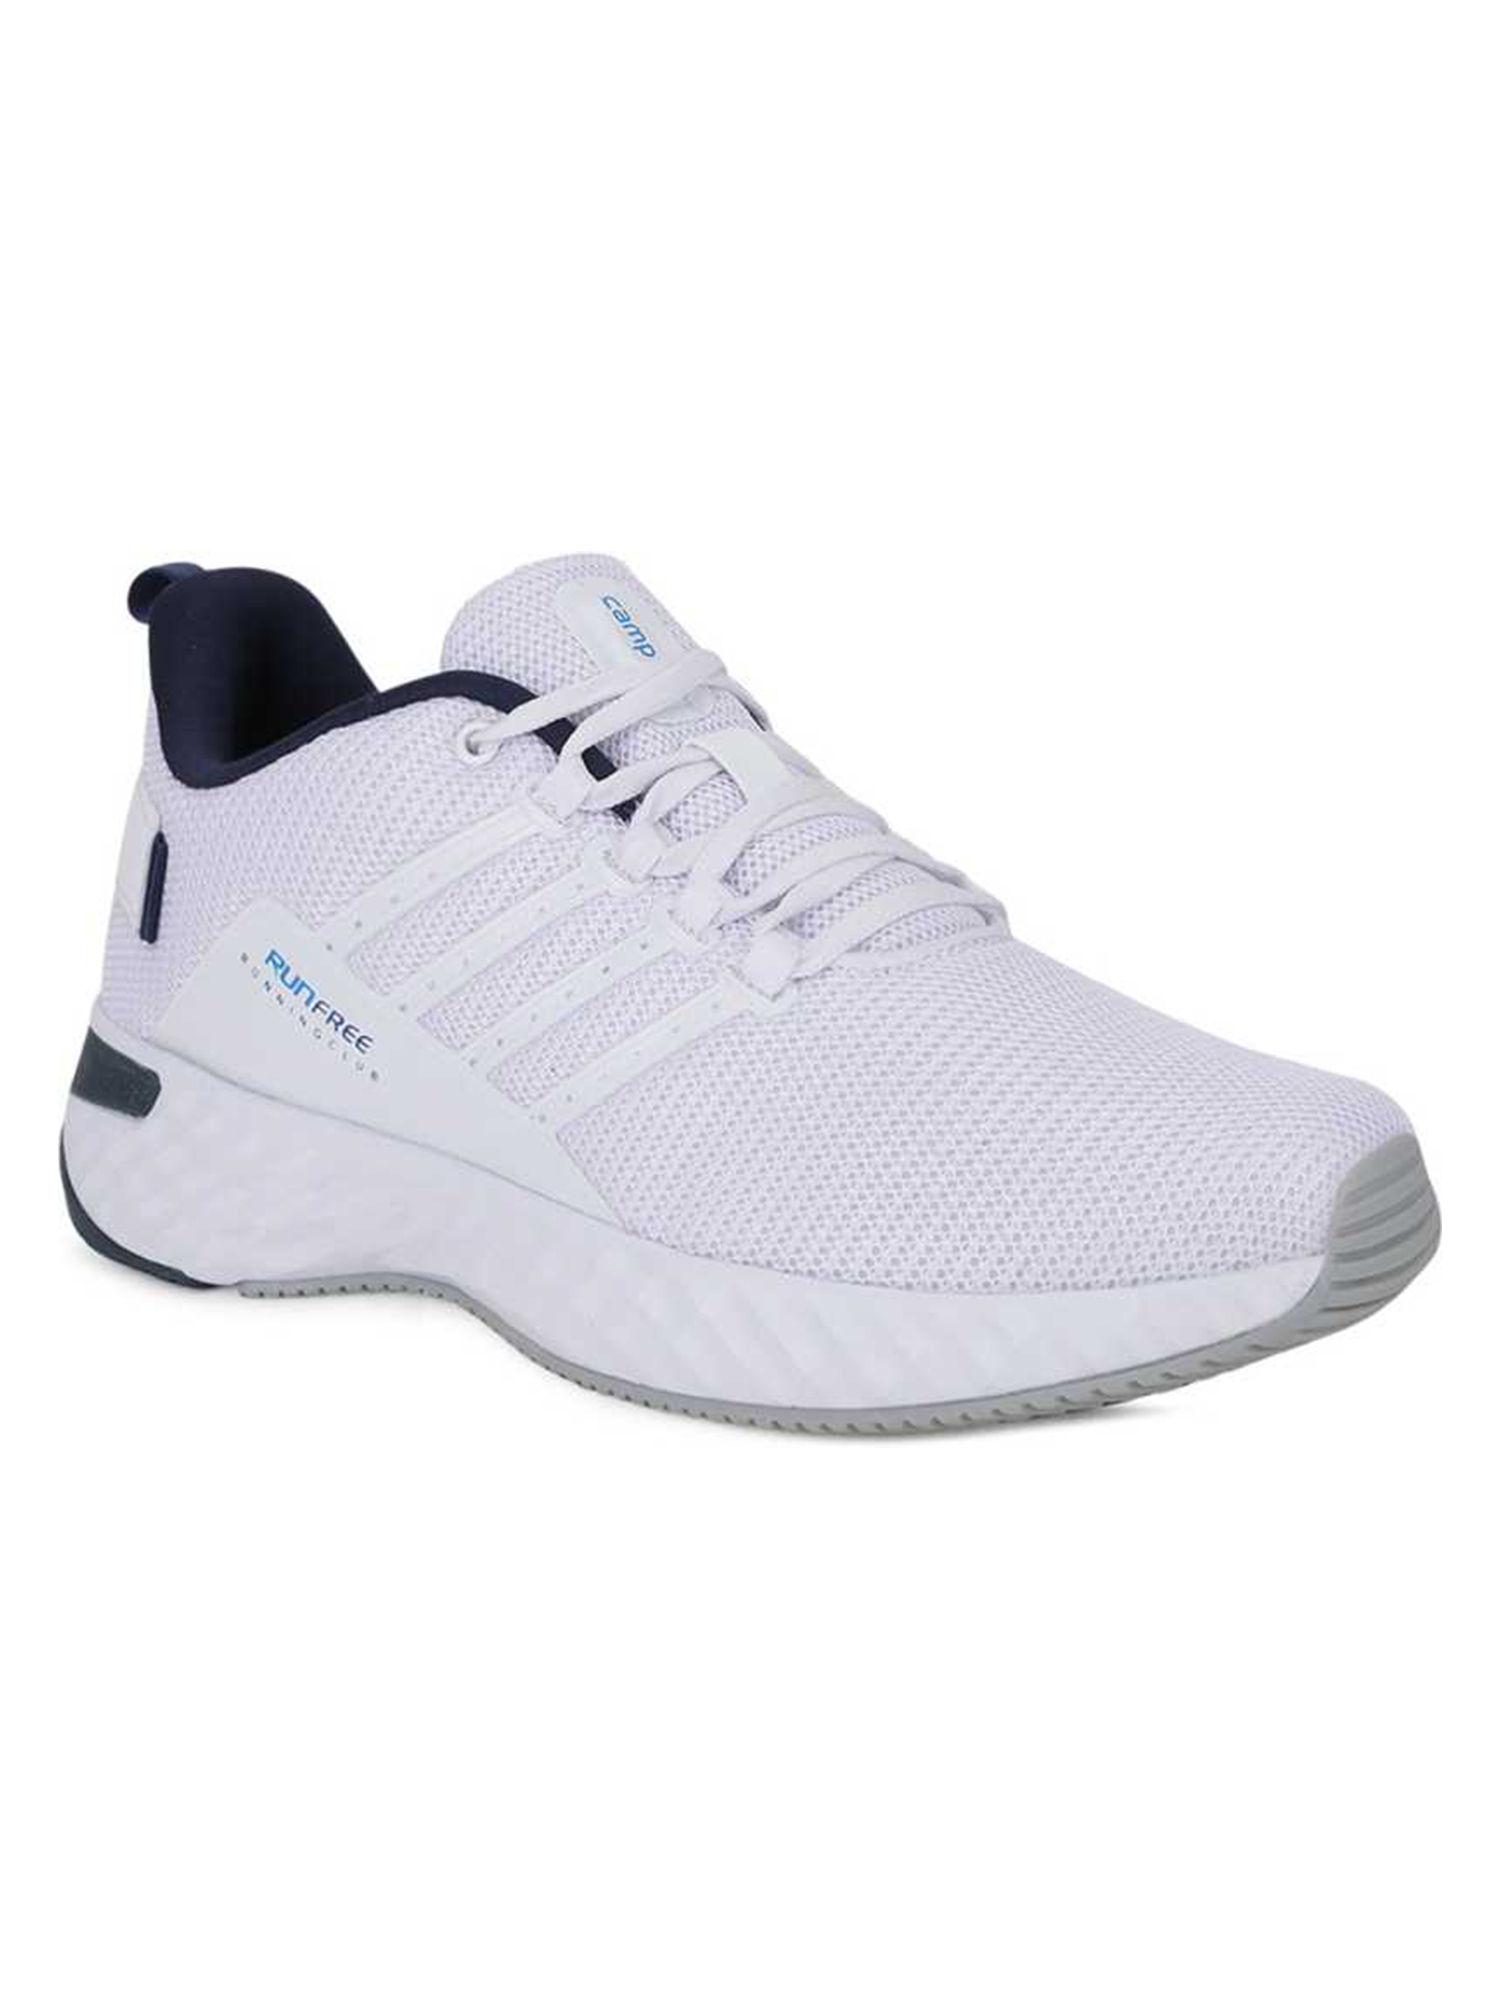 oslo pro white running shoes for men